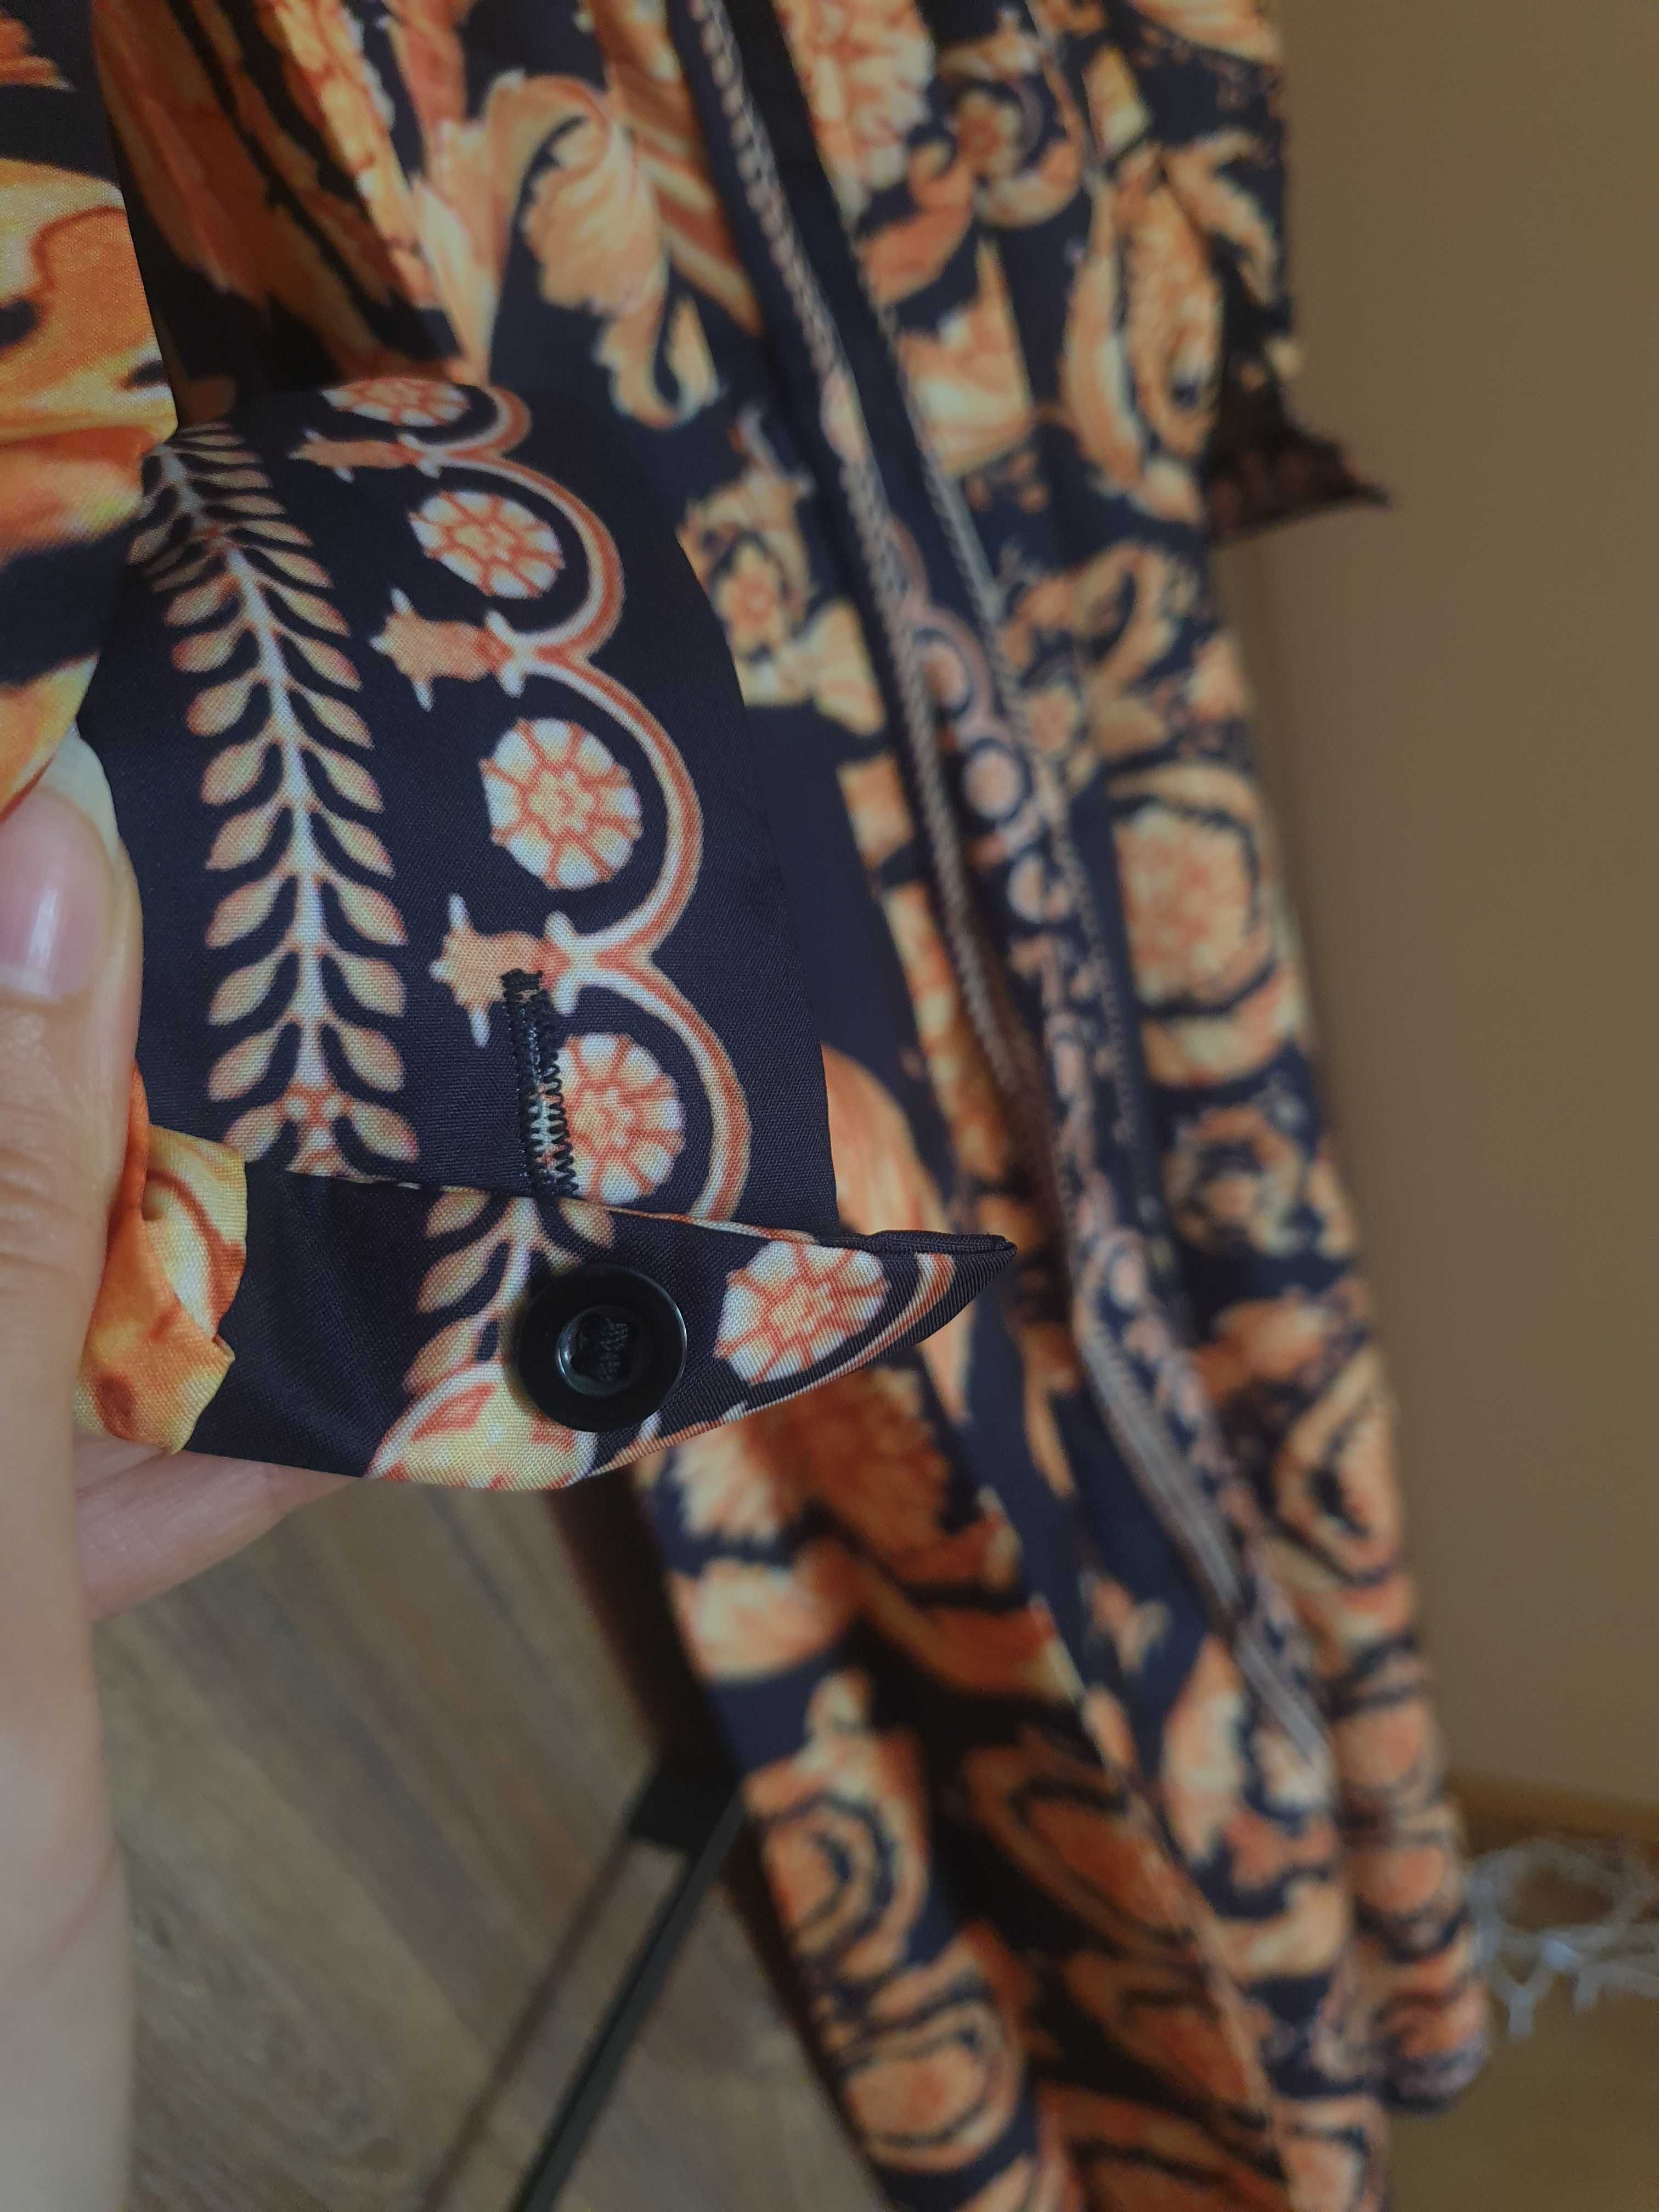 Egipska Boho dluga suknia instagram orient arabska tunika wzory